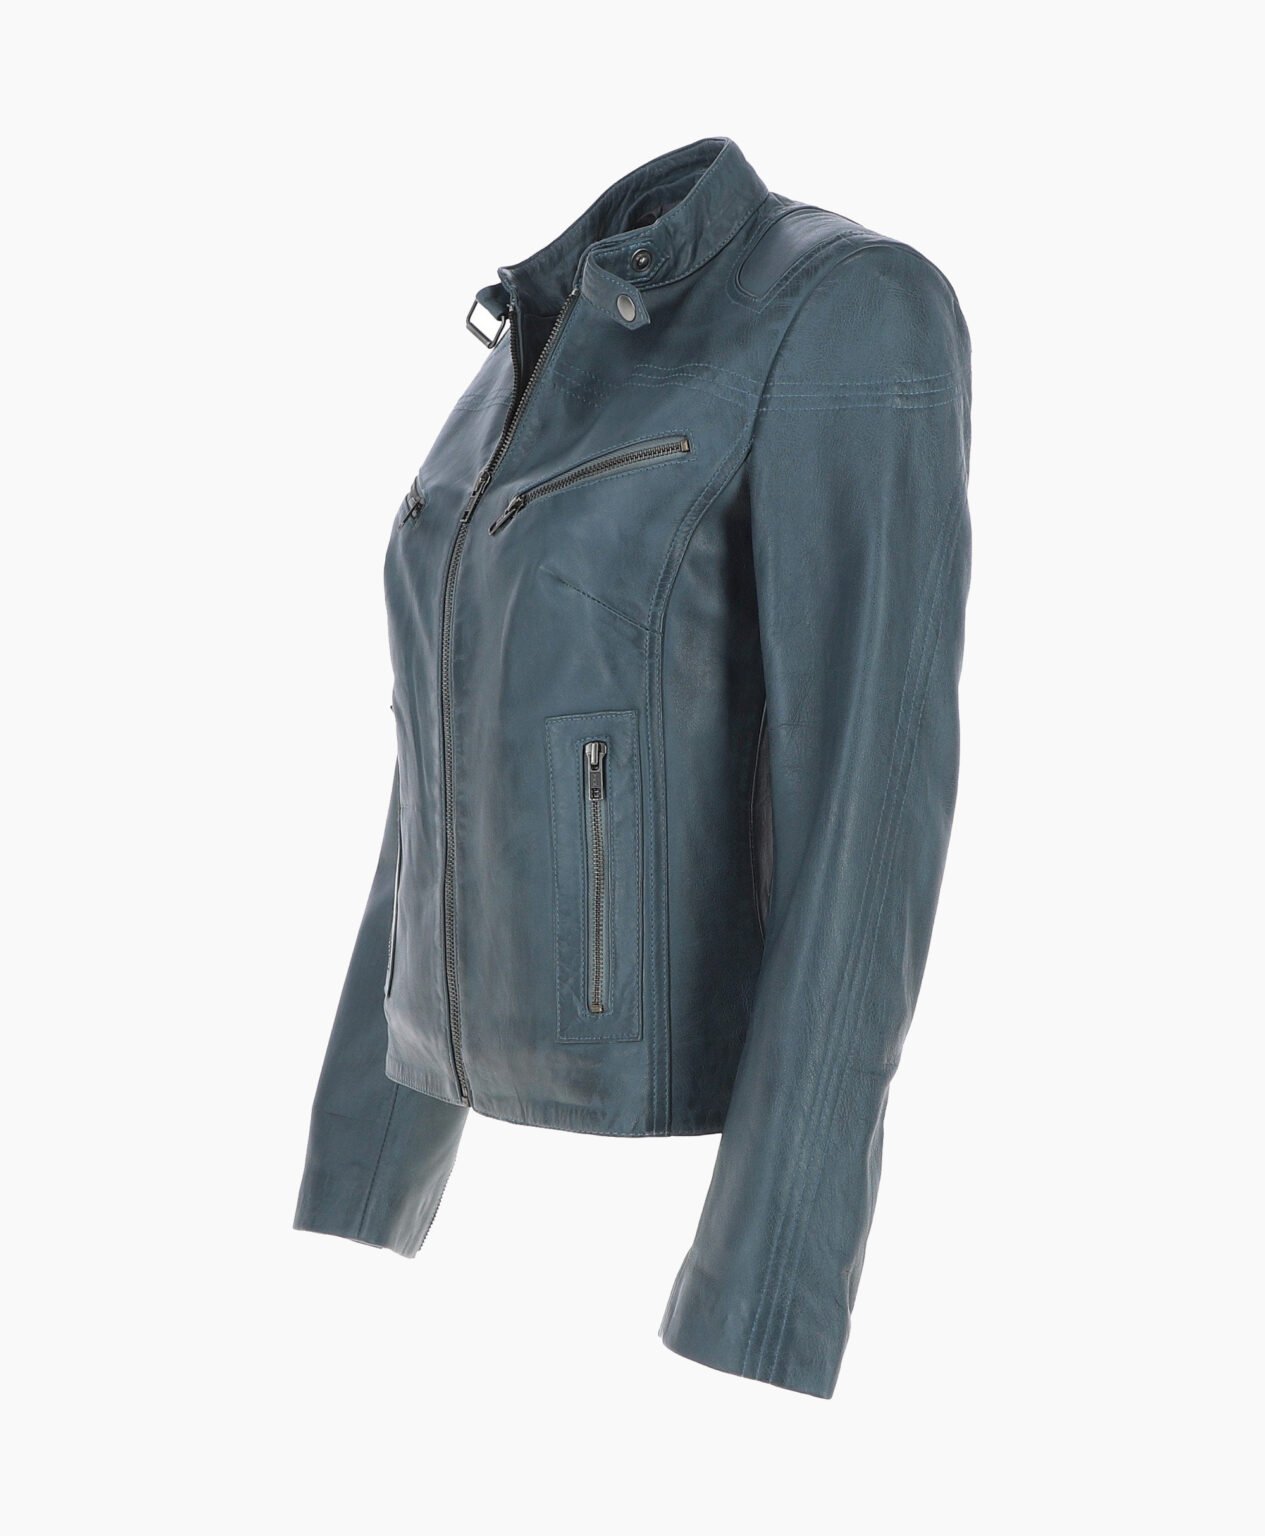 vogue-jacket-leather-biker-jacket-gray-alton-image201